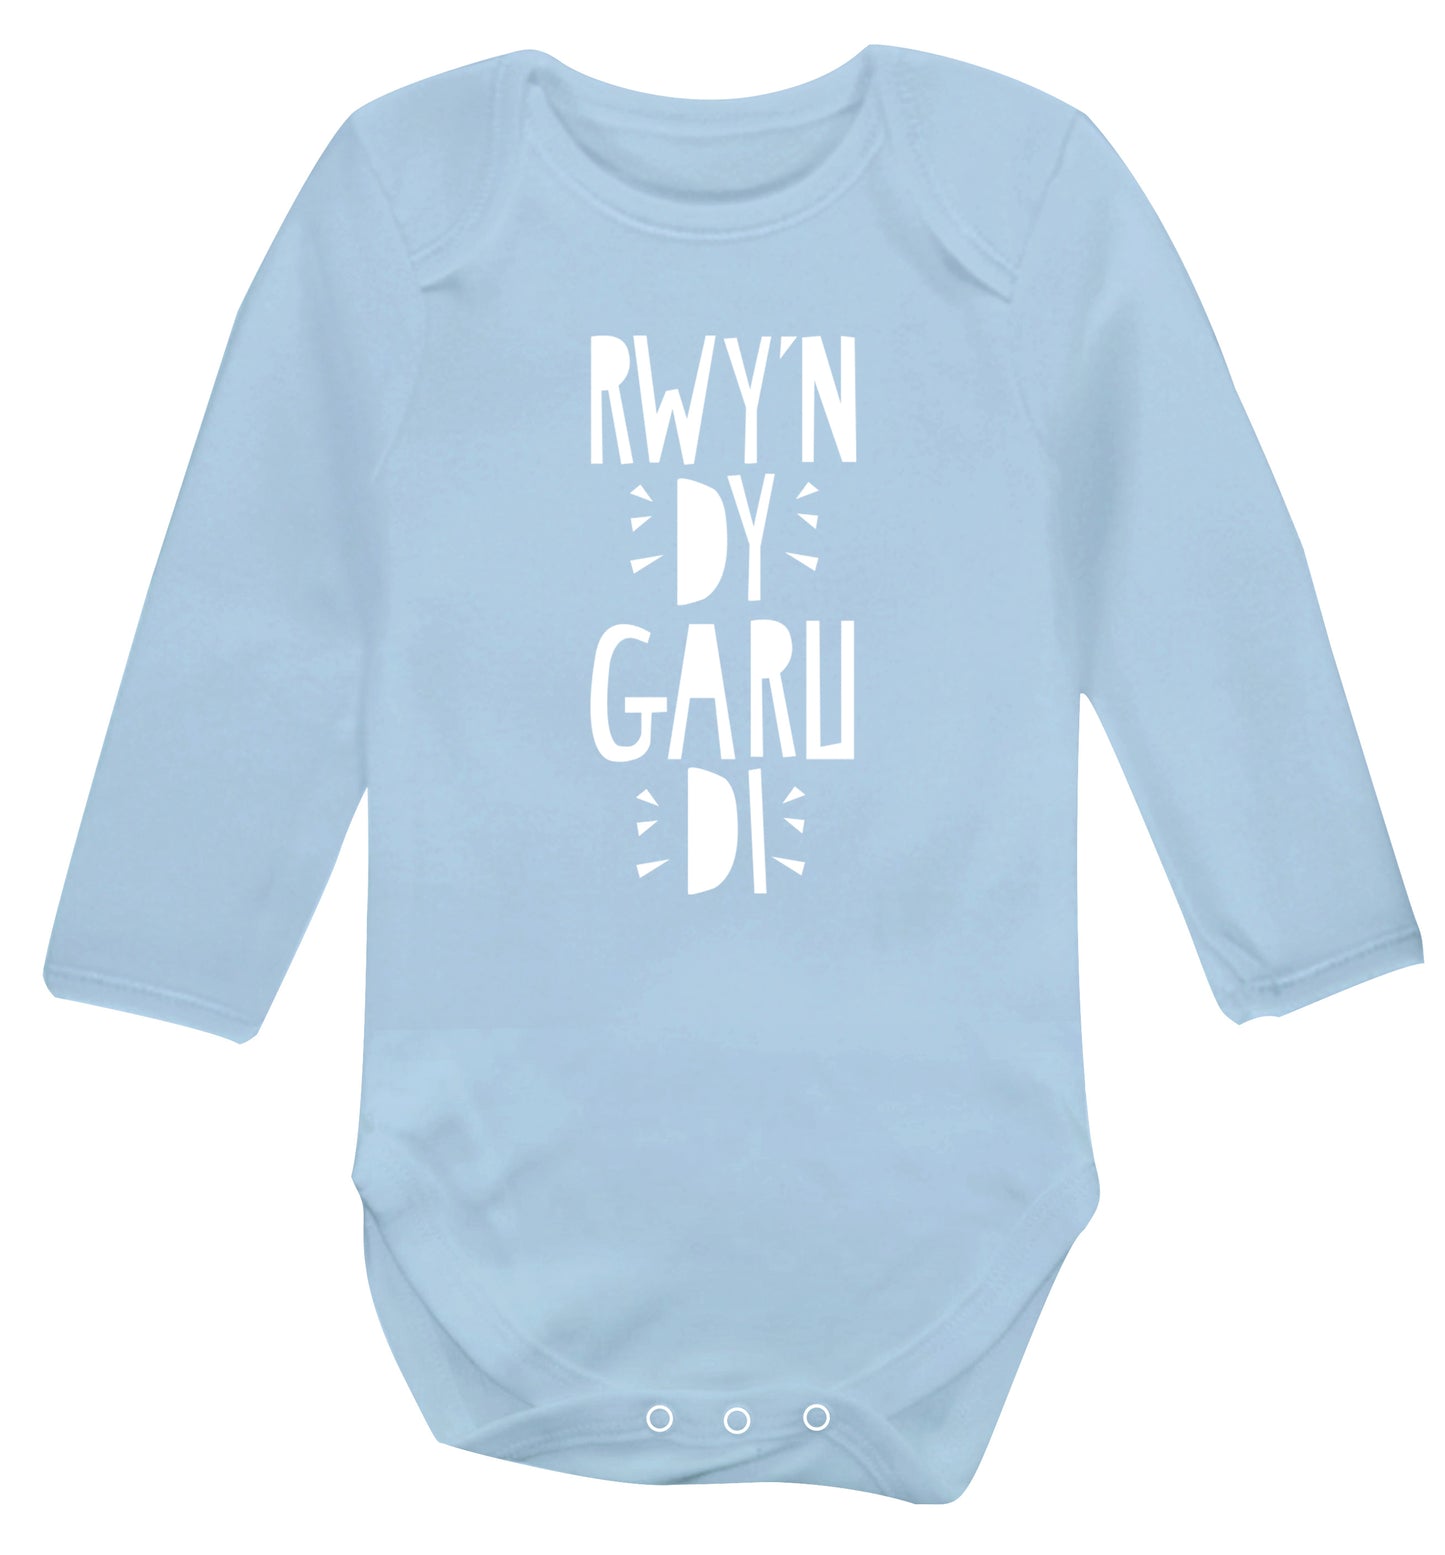 Rwy'n dy garu di - I love you Baby Vest long sleeved pale blue 6-12 months